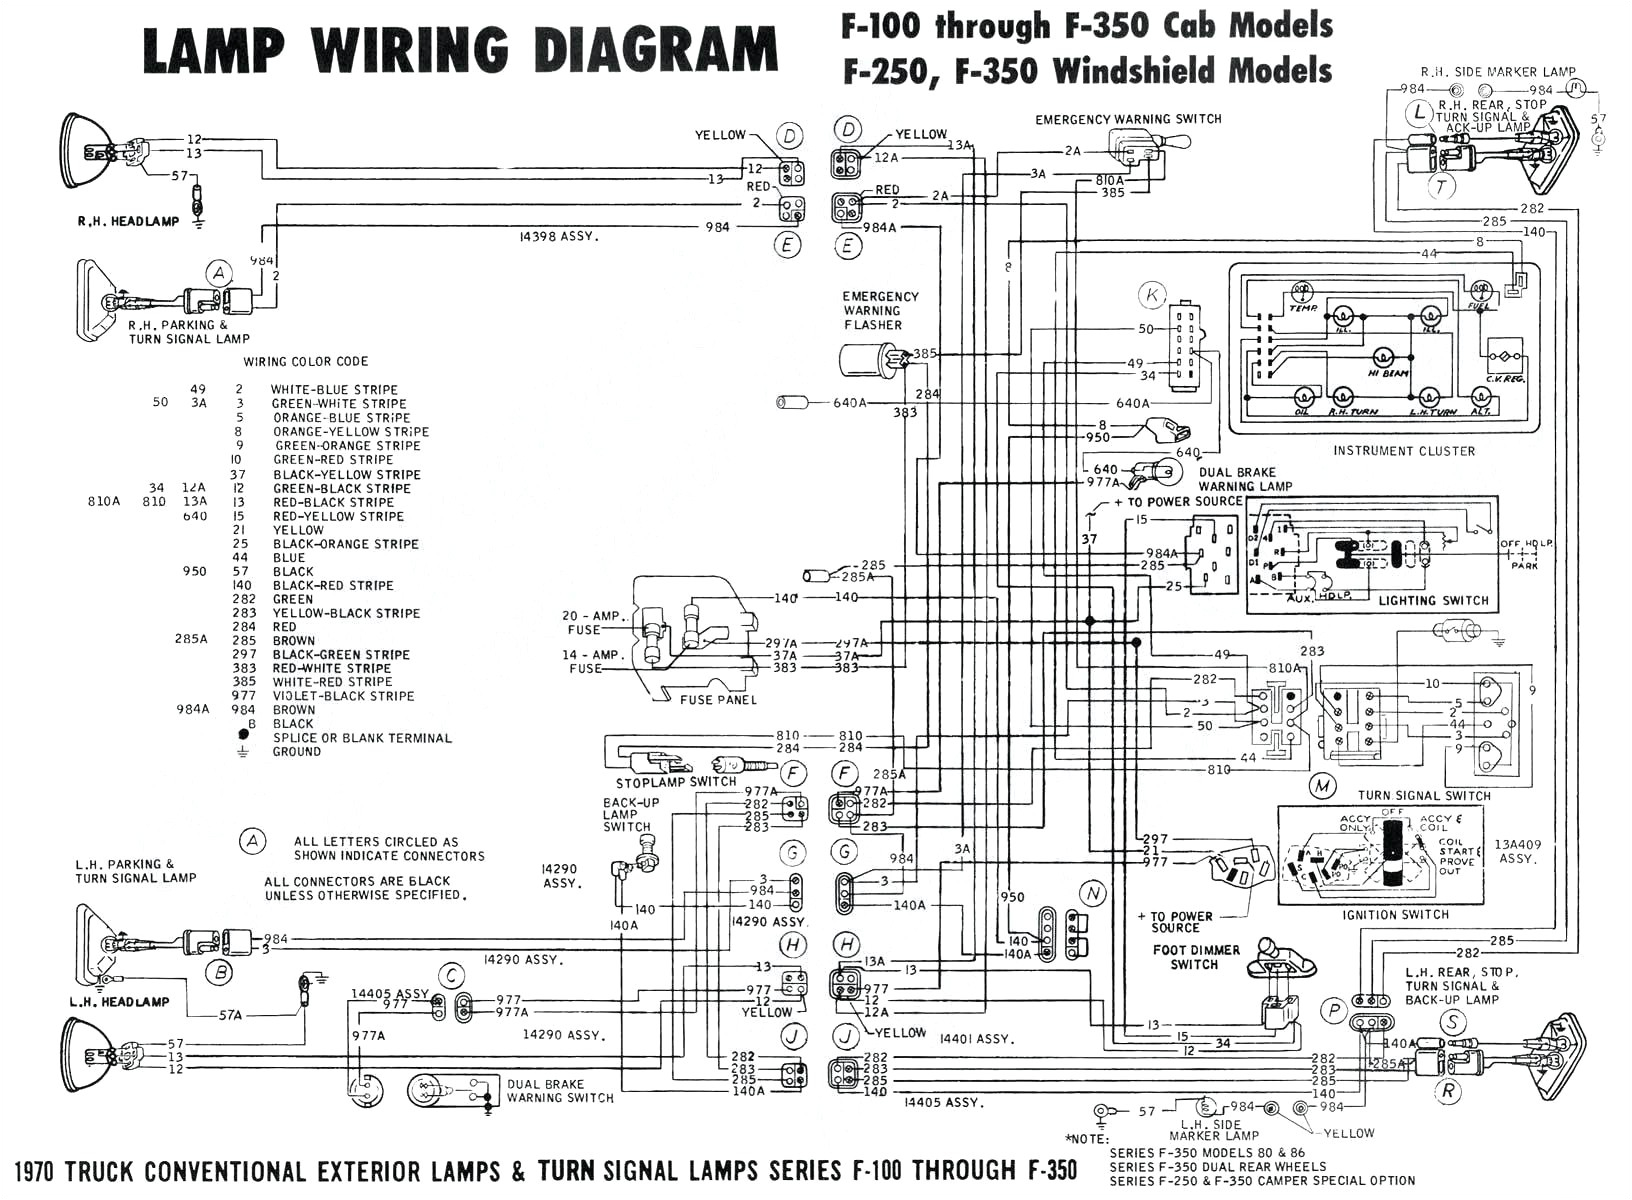 battery backup circuit diagram tradeoficcom blog wiring diagram battery backup power circuit diagram tradeoficcom